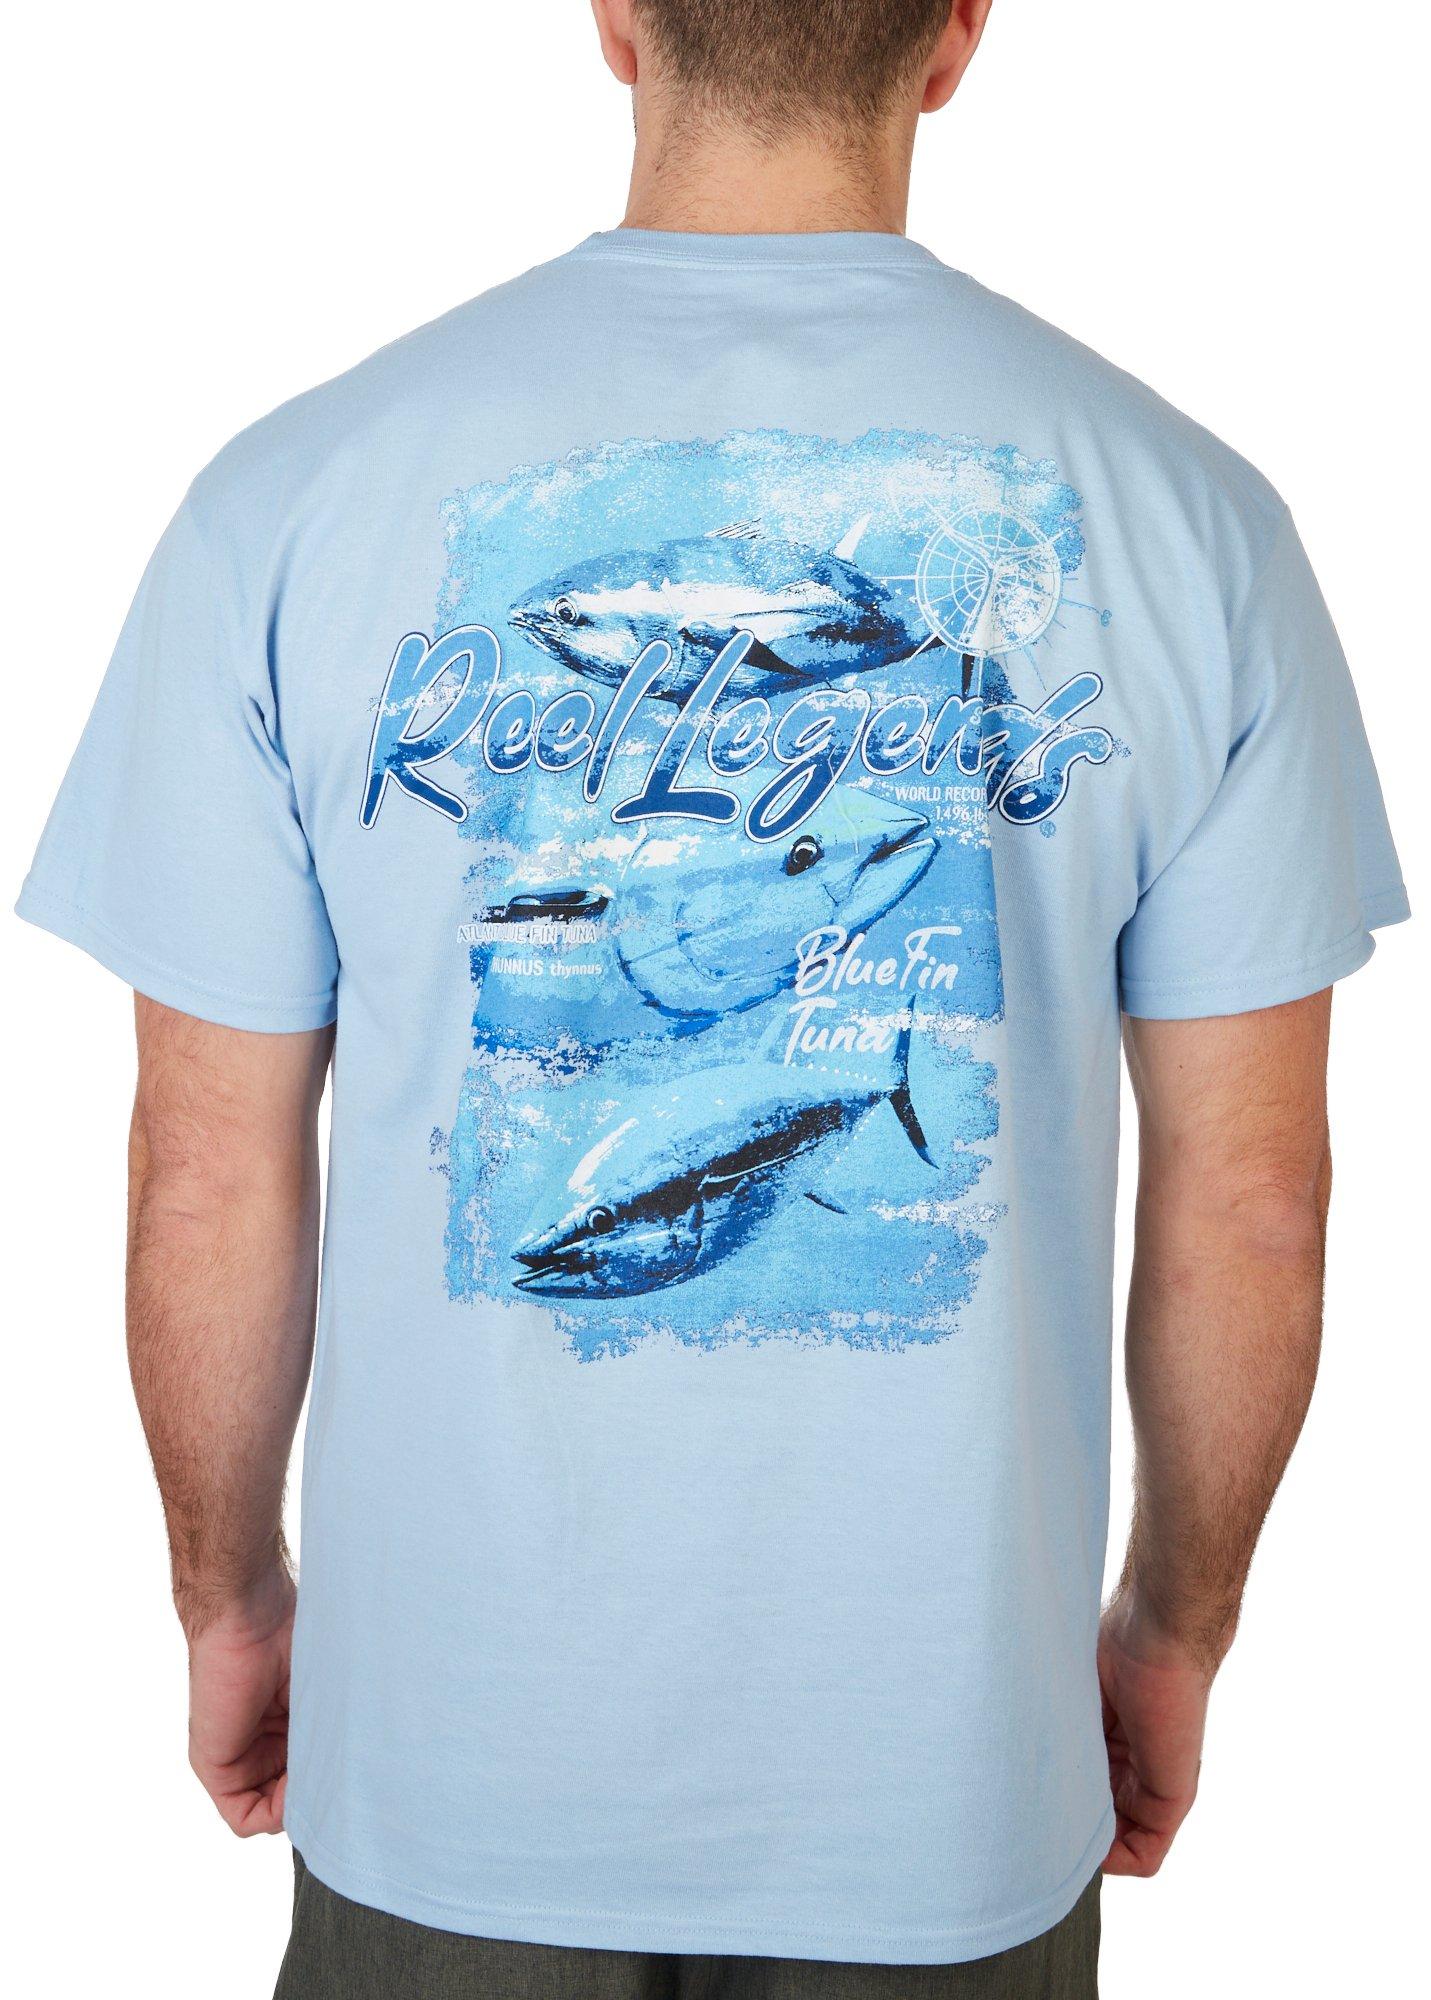 Reel Legends Shirt Adult XXL 2XL Blue Florida Keys Logo Spell Out Fishing  Mens - AliExpress